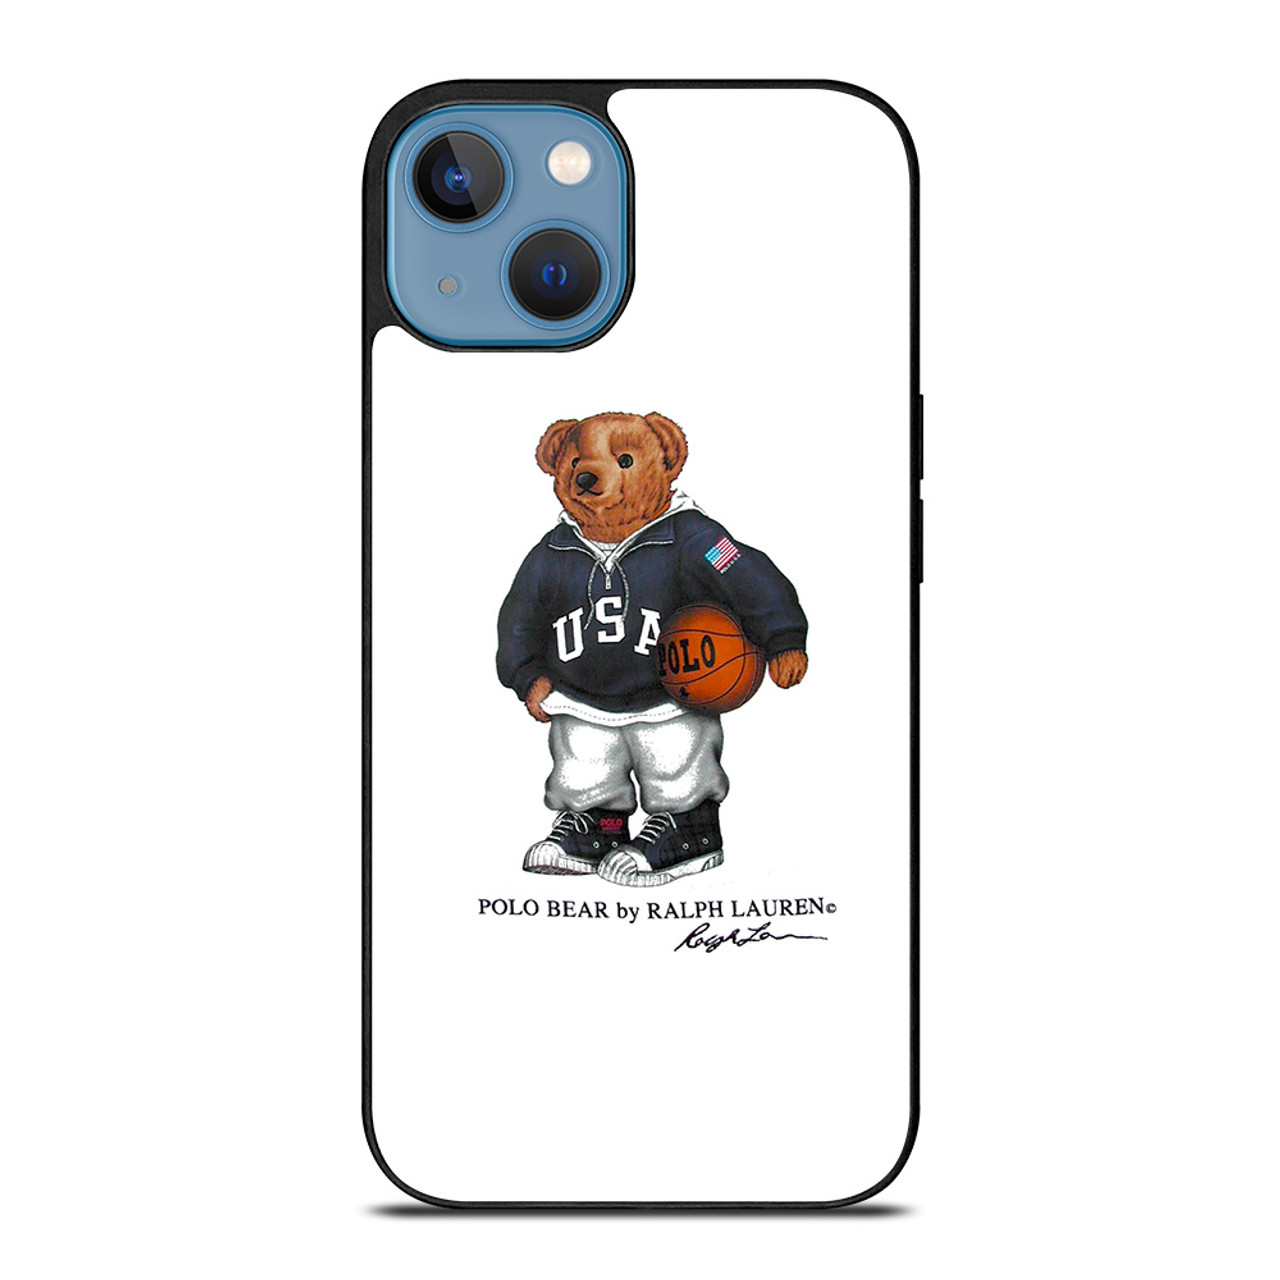 POLO BEAR RALPH LAUREN 3 iPhone 13 Case Cover